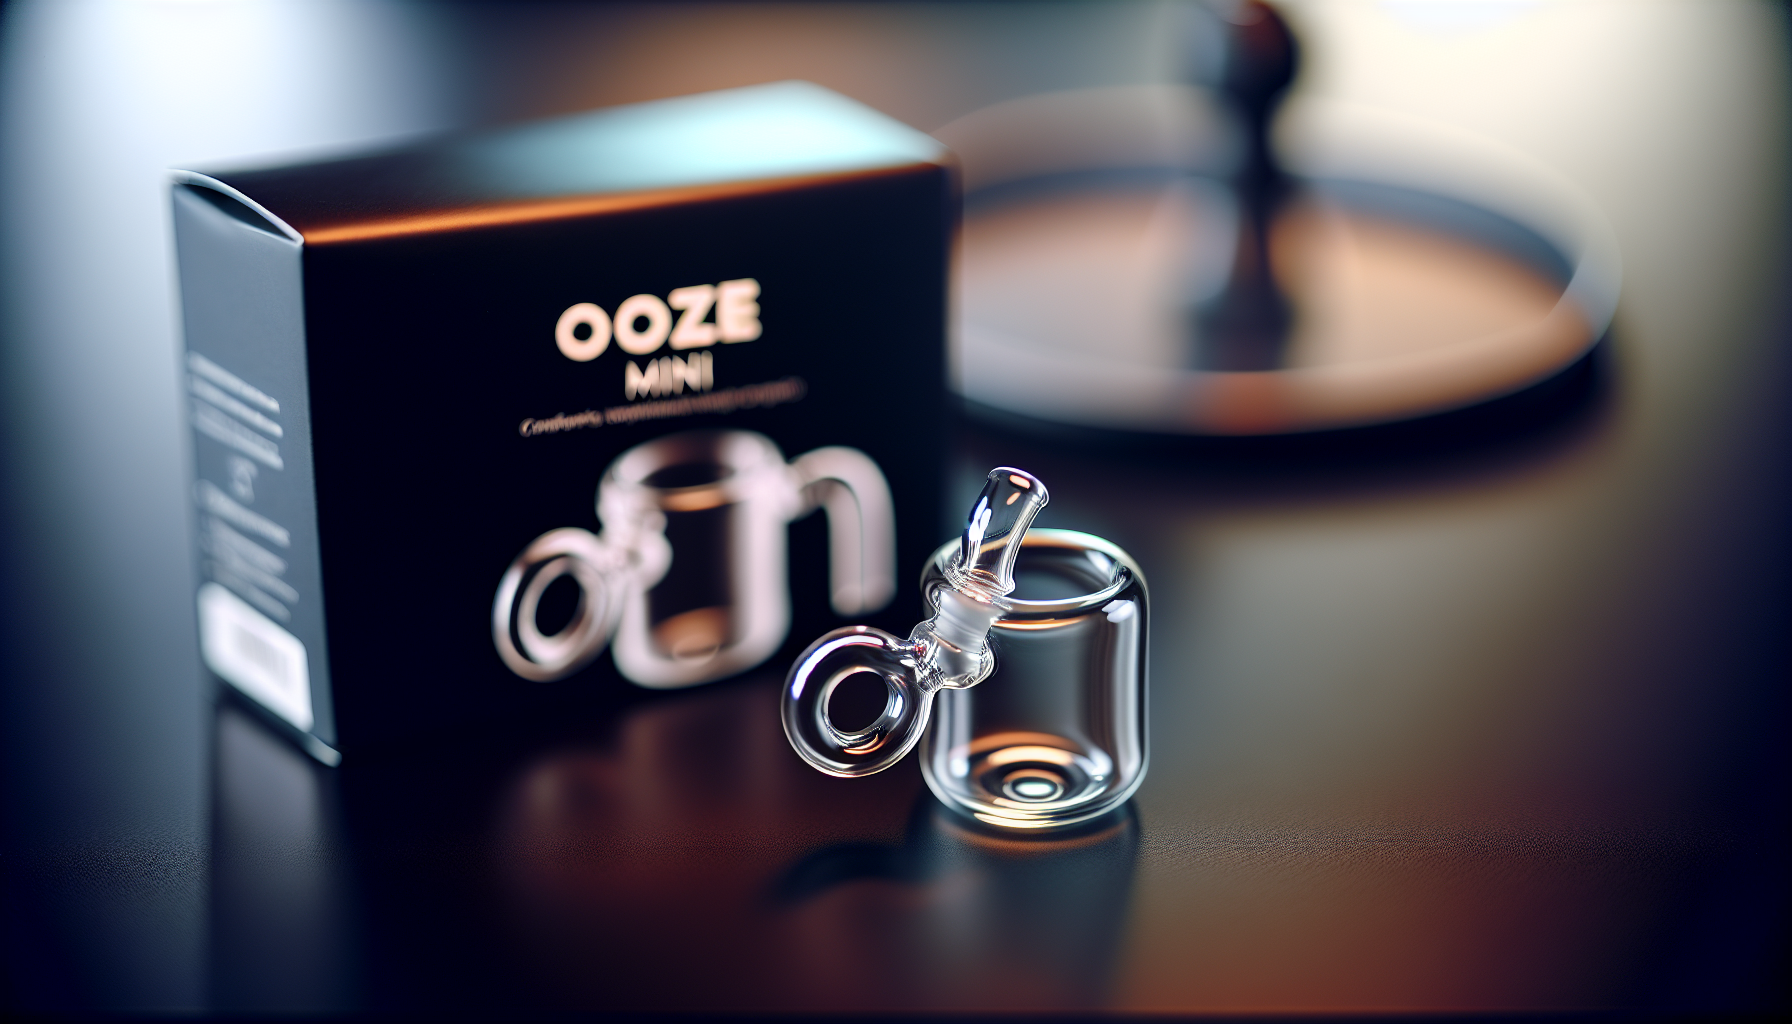 Ooze Mini with comfortable glass loop handle